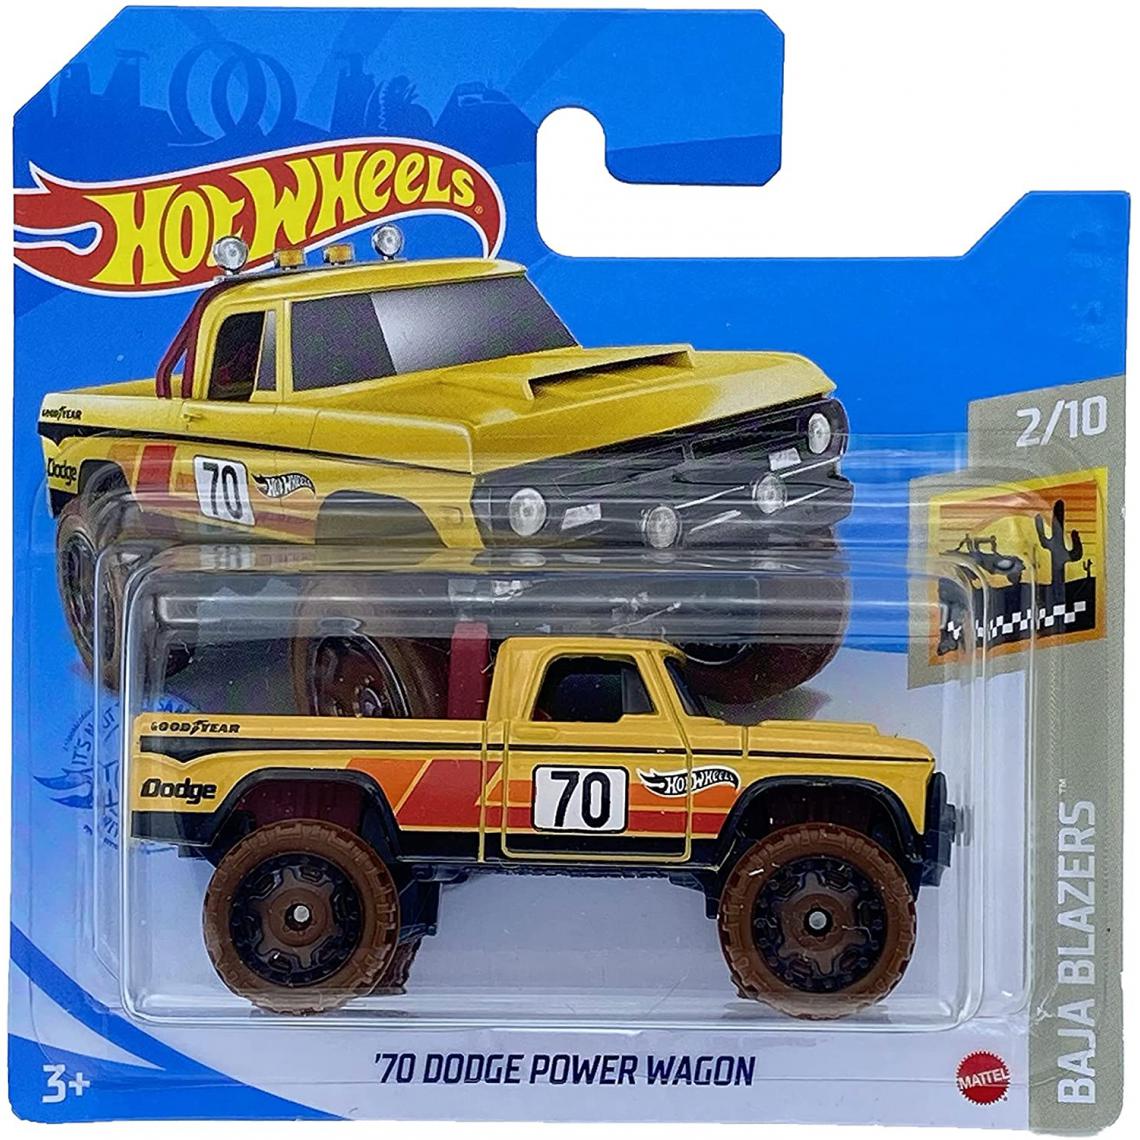 Hot Wheels - véhicule Dodge Power Wagon Baja Blazers 2/10 - Voiture de collection miniature